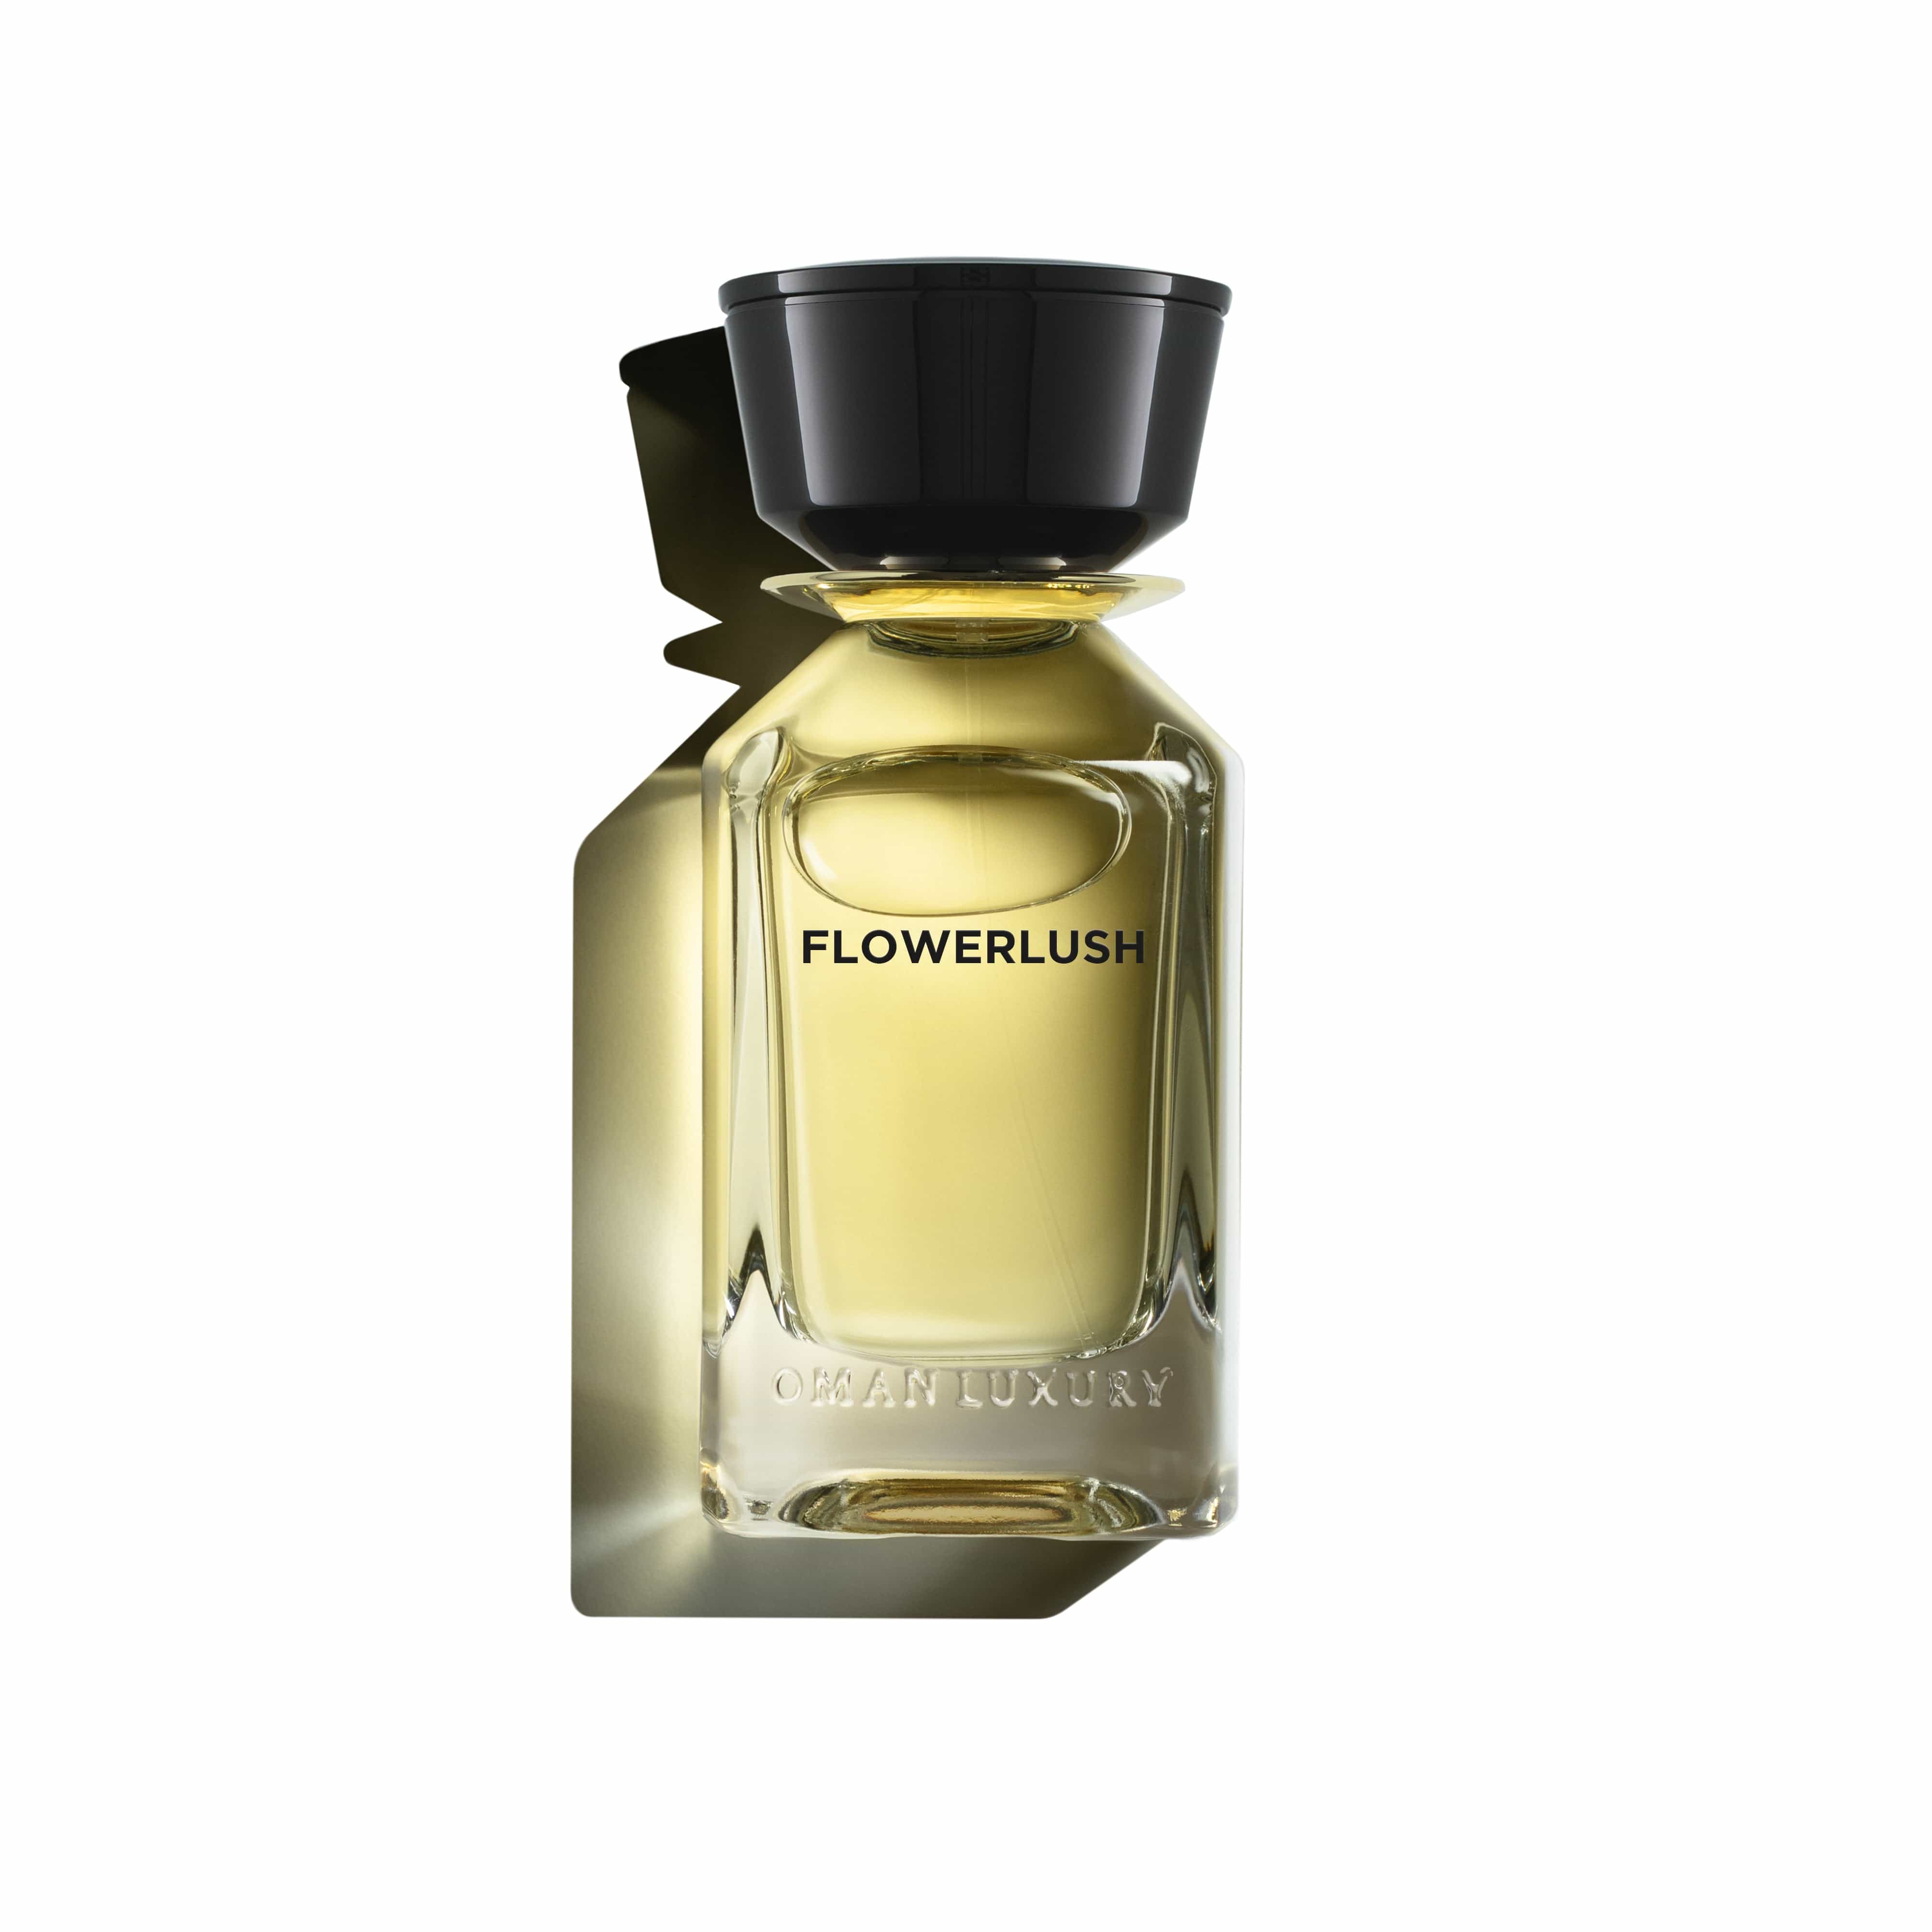 Flowerlush Oman Luxury Eau de Parfum